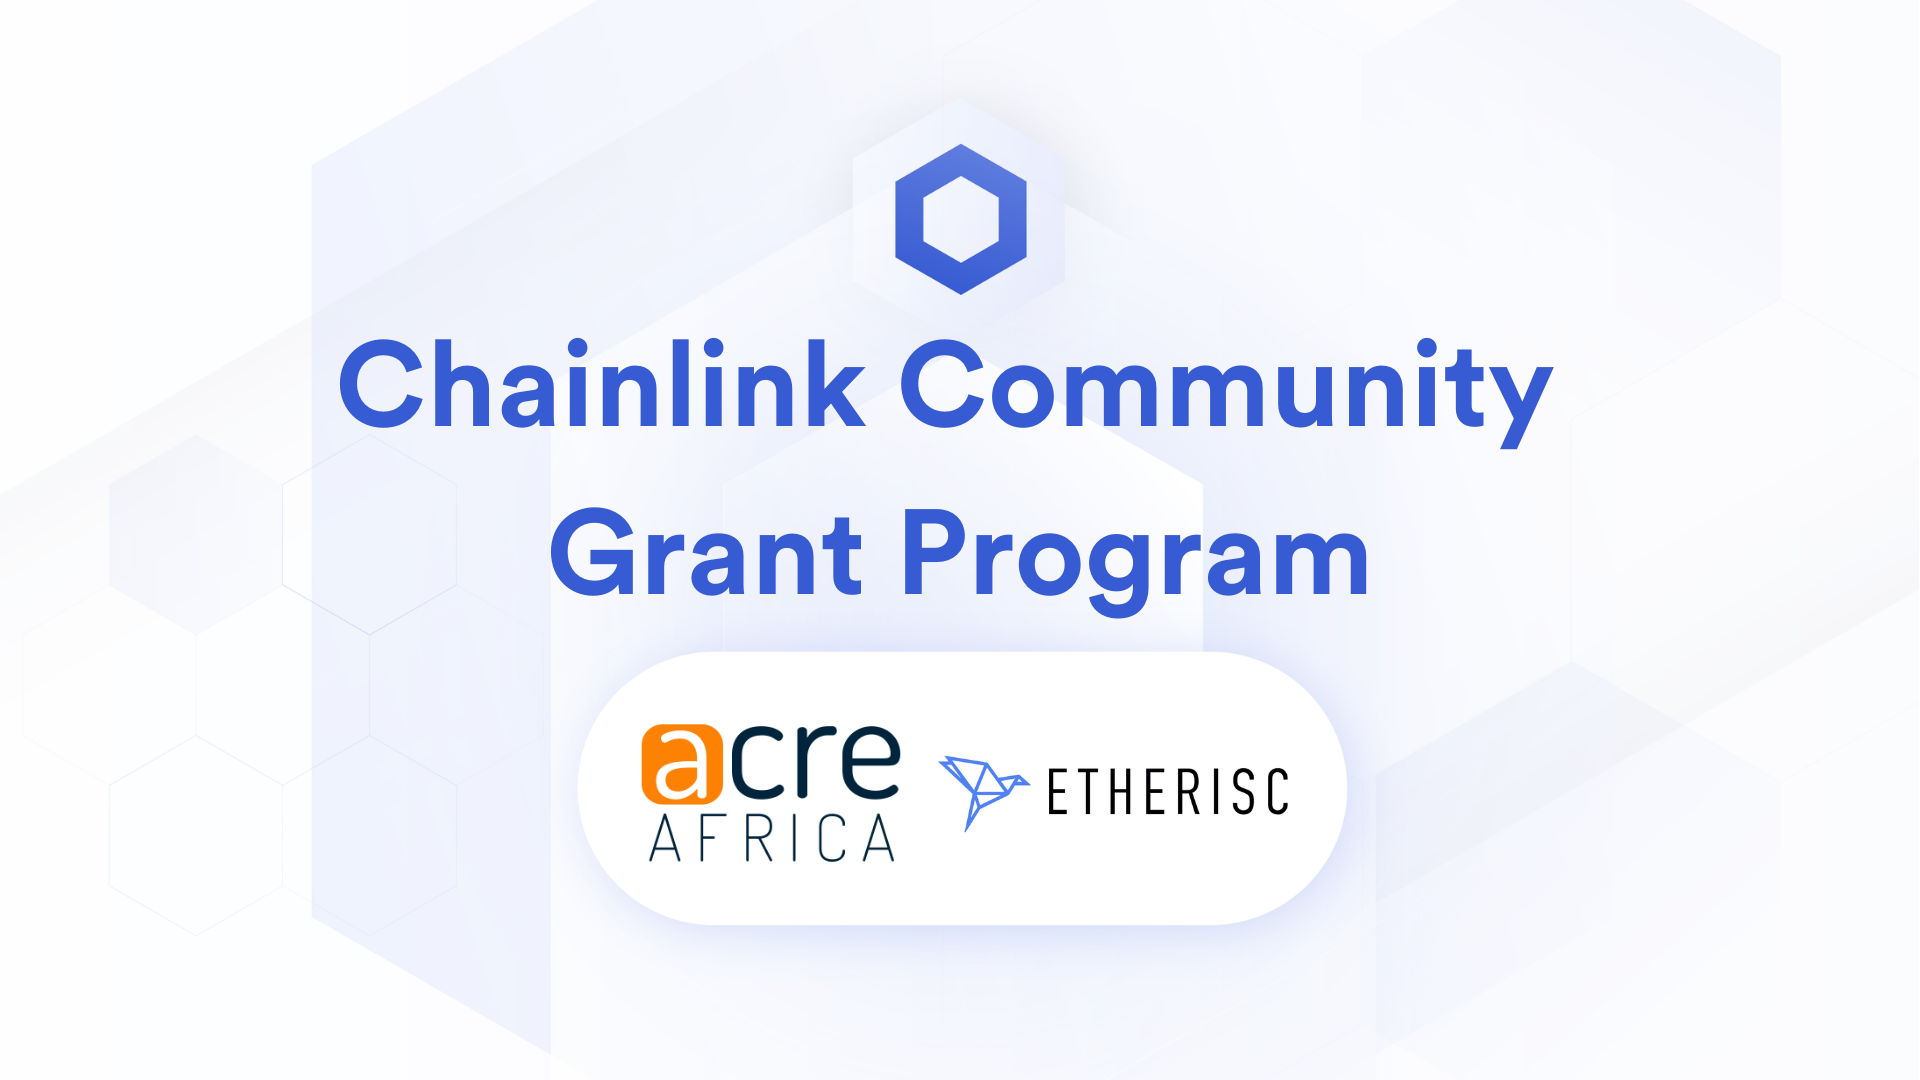 ACRE Africa和Etherisc的合资项目获得Chainlink社区勉励奖金